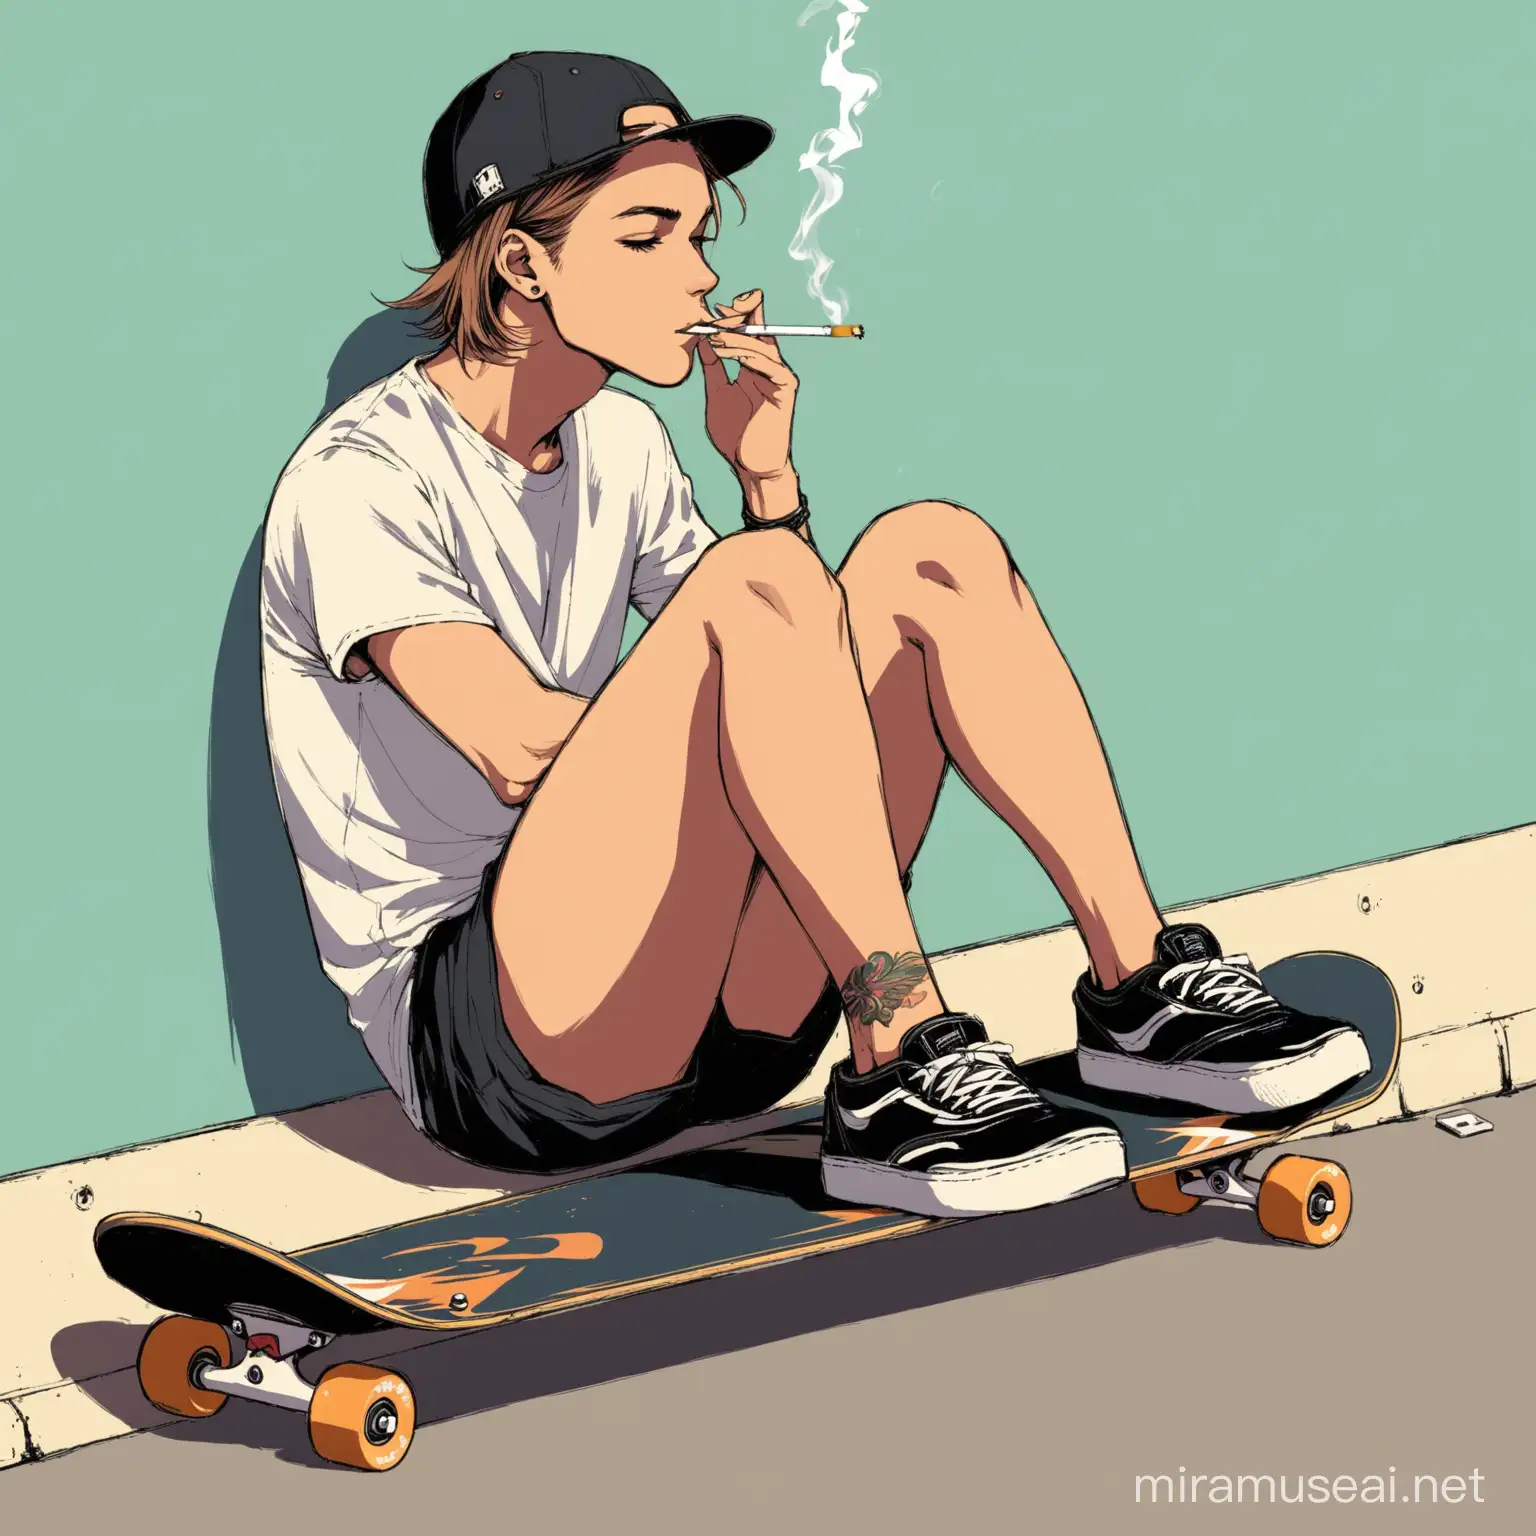 Skateboarder Smoking a Cigarette